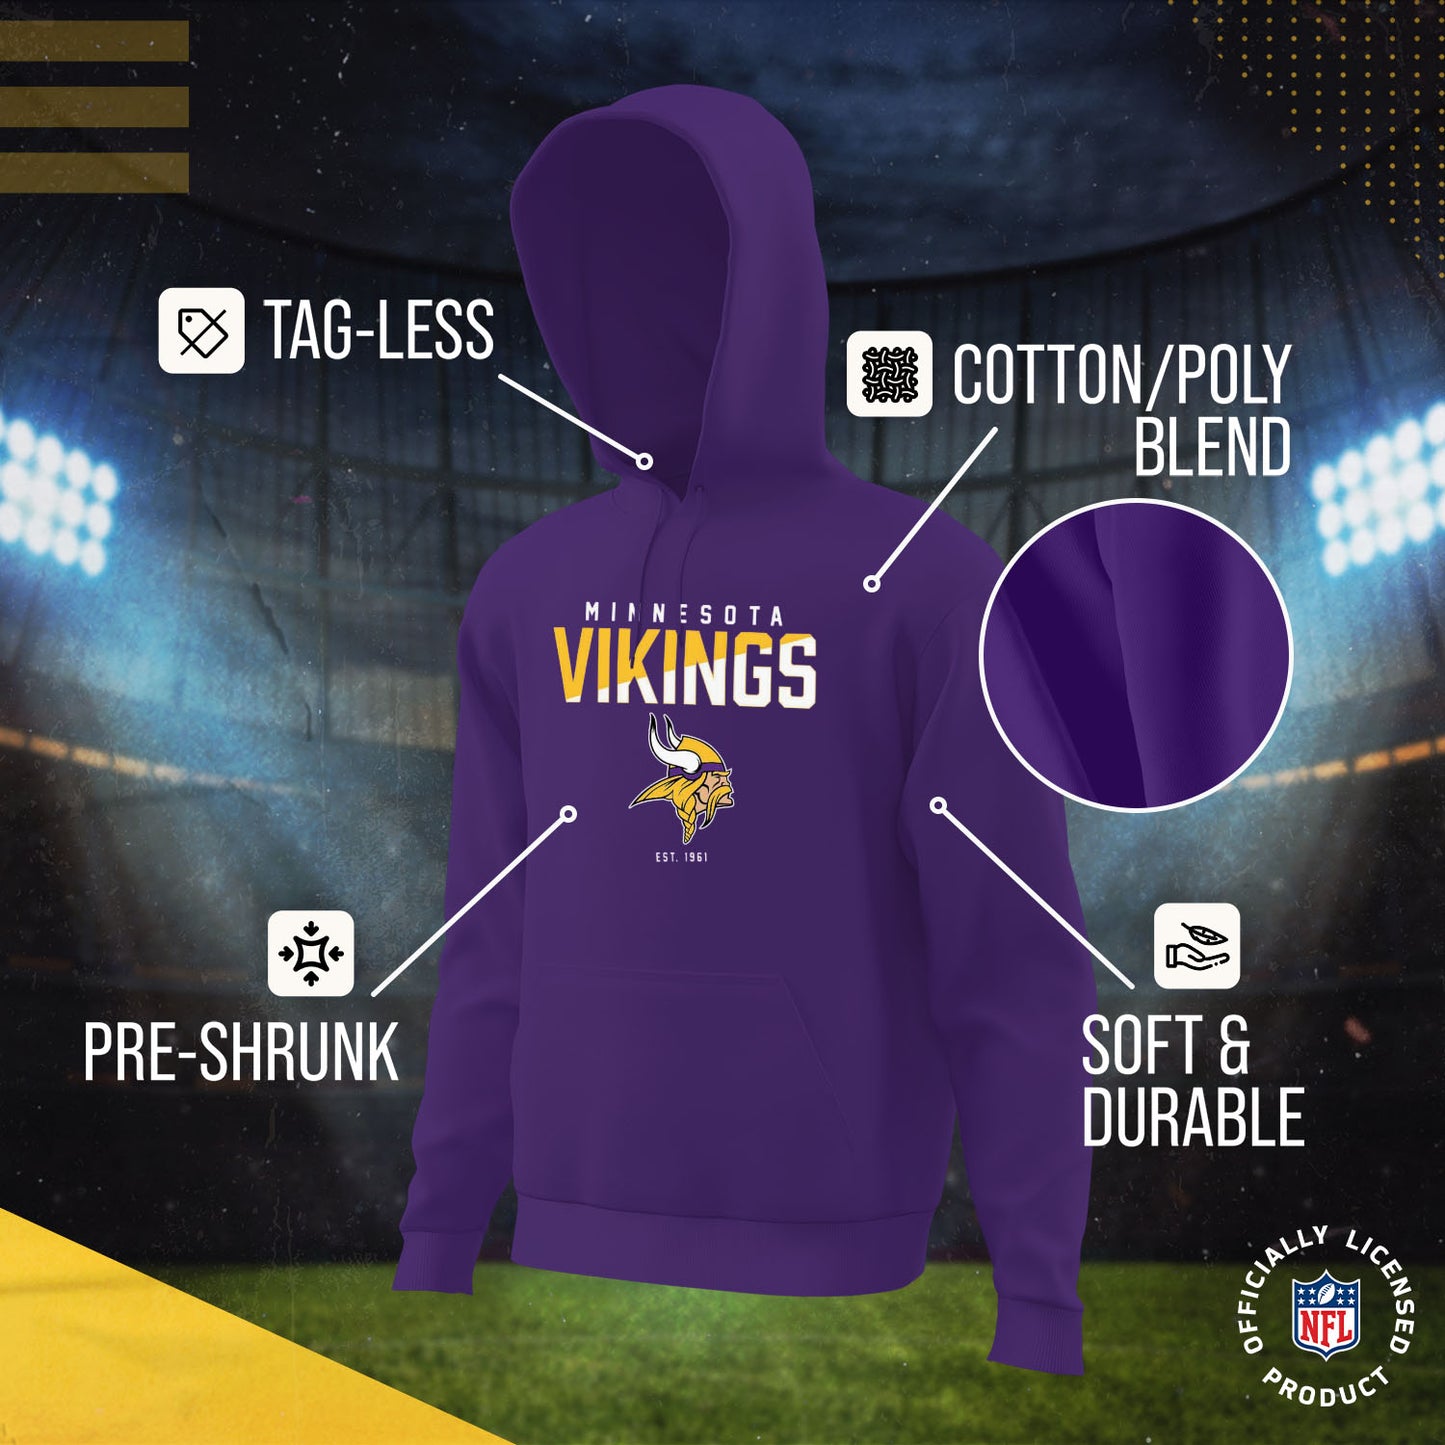 Minnesota Vikings Adult NFL Diagonal Fade Fleece Hooded Sweatshirt - Purple